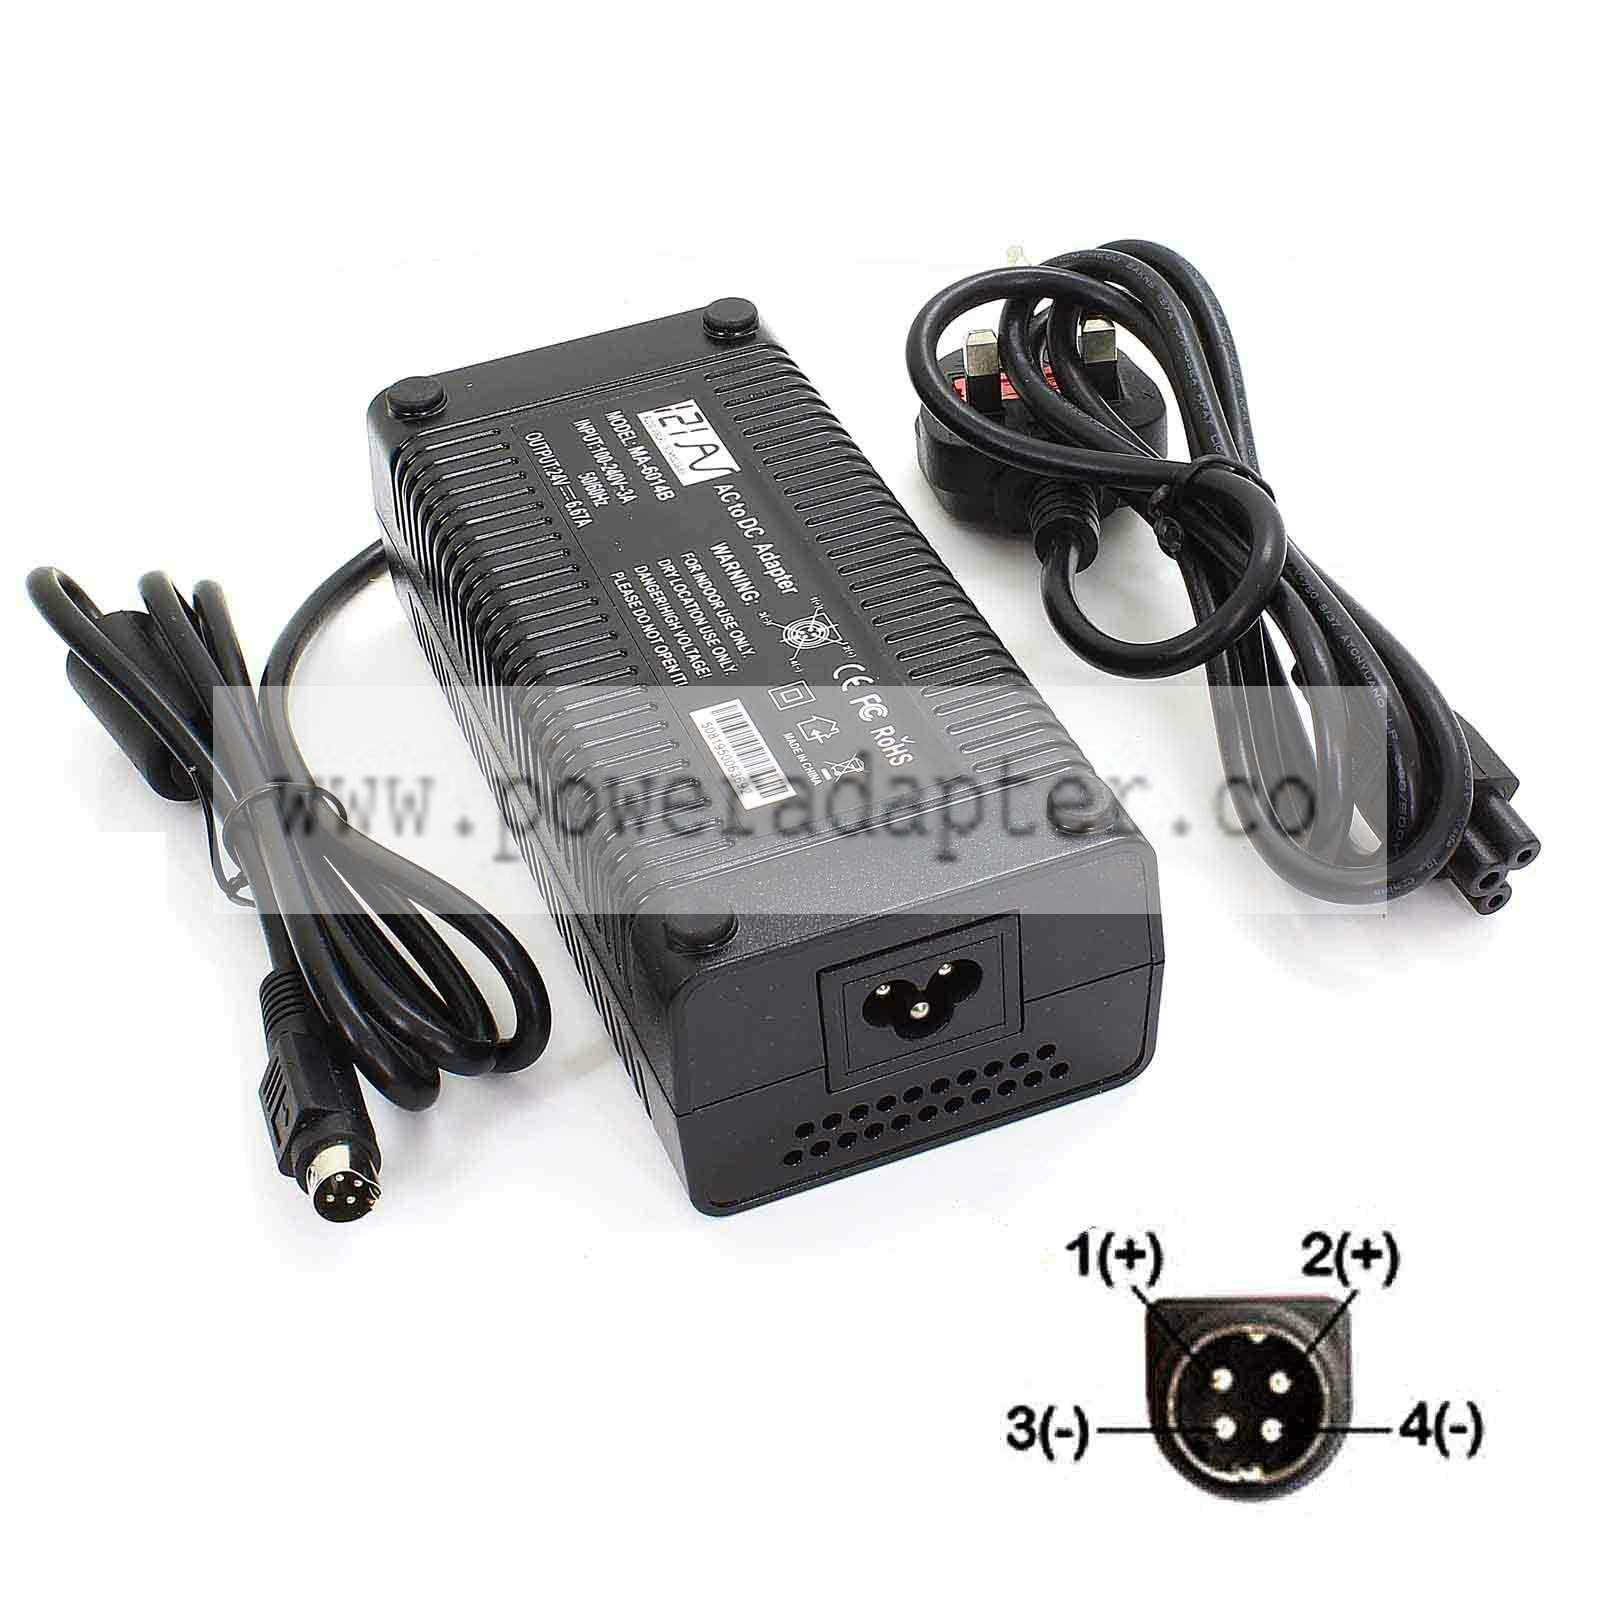 Power Supply and AC Adapter for GOODMANS LD2050FVT LCD / LED TV Brand: 121AV Type: AC/DC Power Adapter MPN: Does no